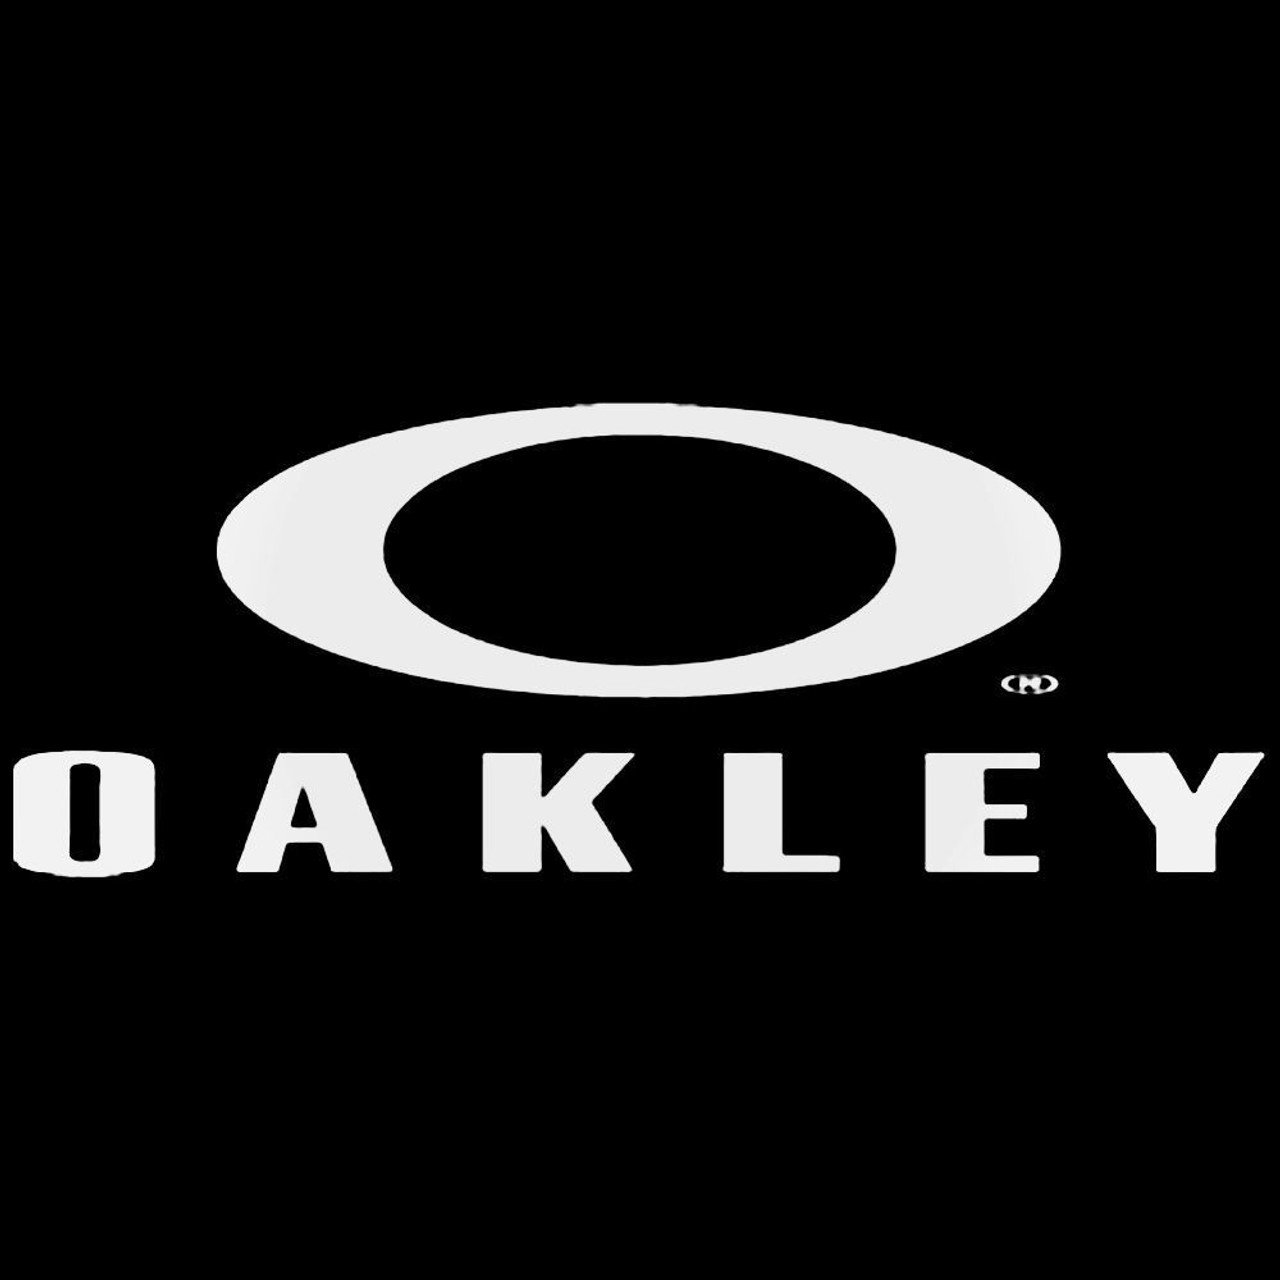  Oakley Logo Sticker Pack, Black, One Size : Sports & Outdoors